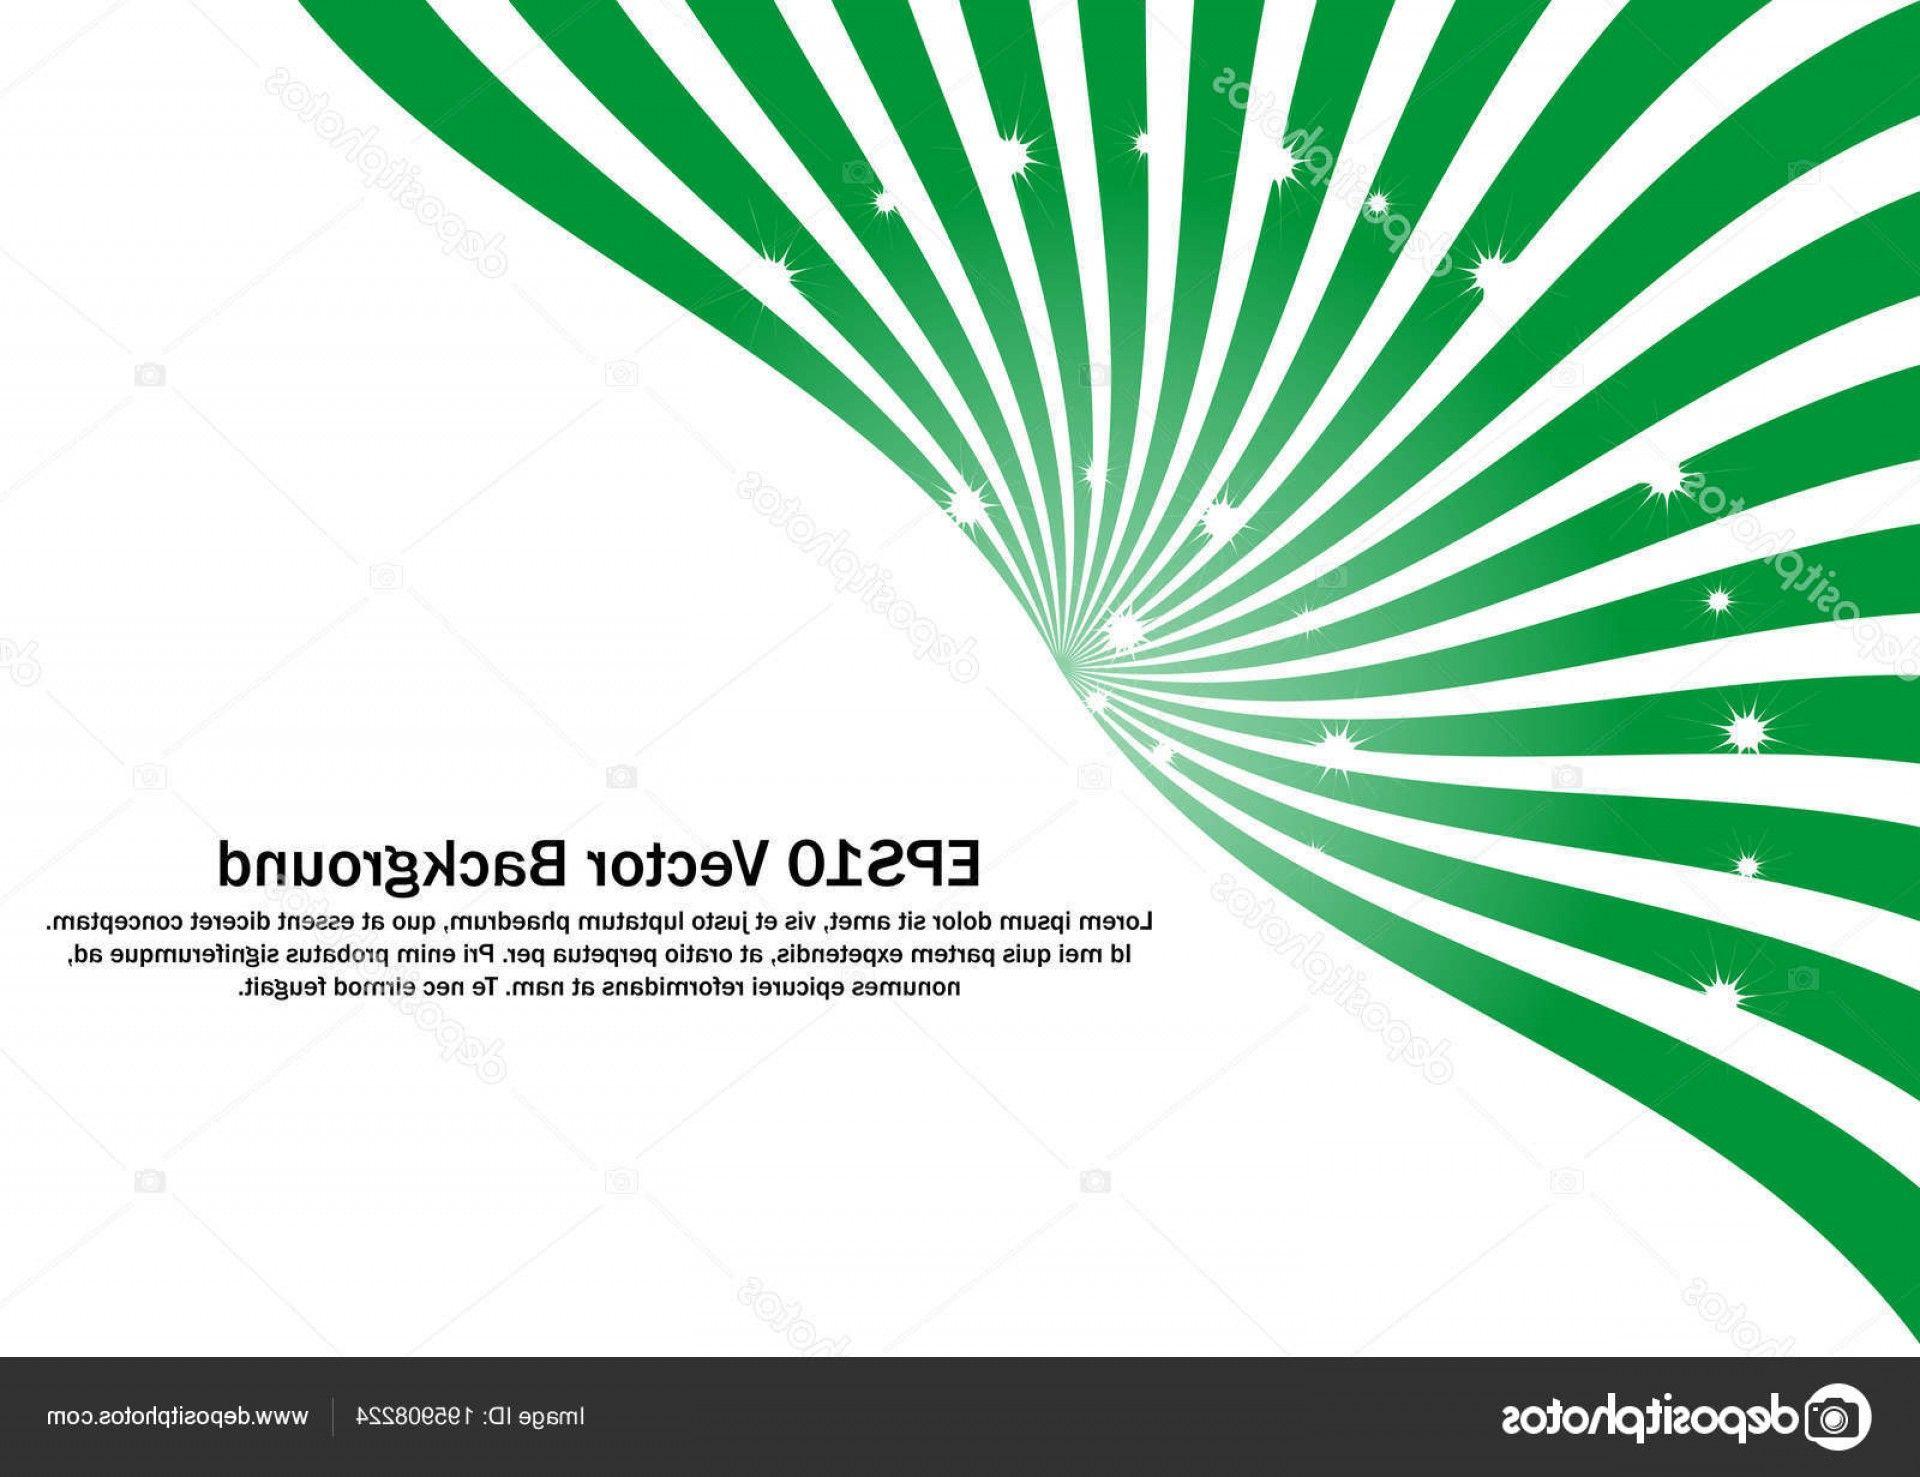 Green and White Swirl Logo - Stock Illustration Green White Swirl Strips Vector | SHOPATCLOTH